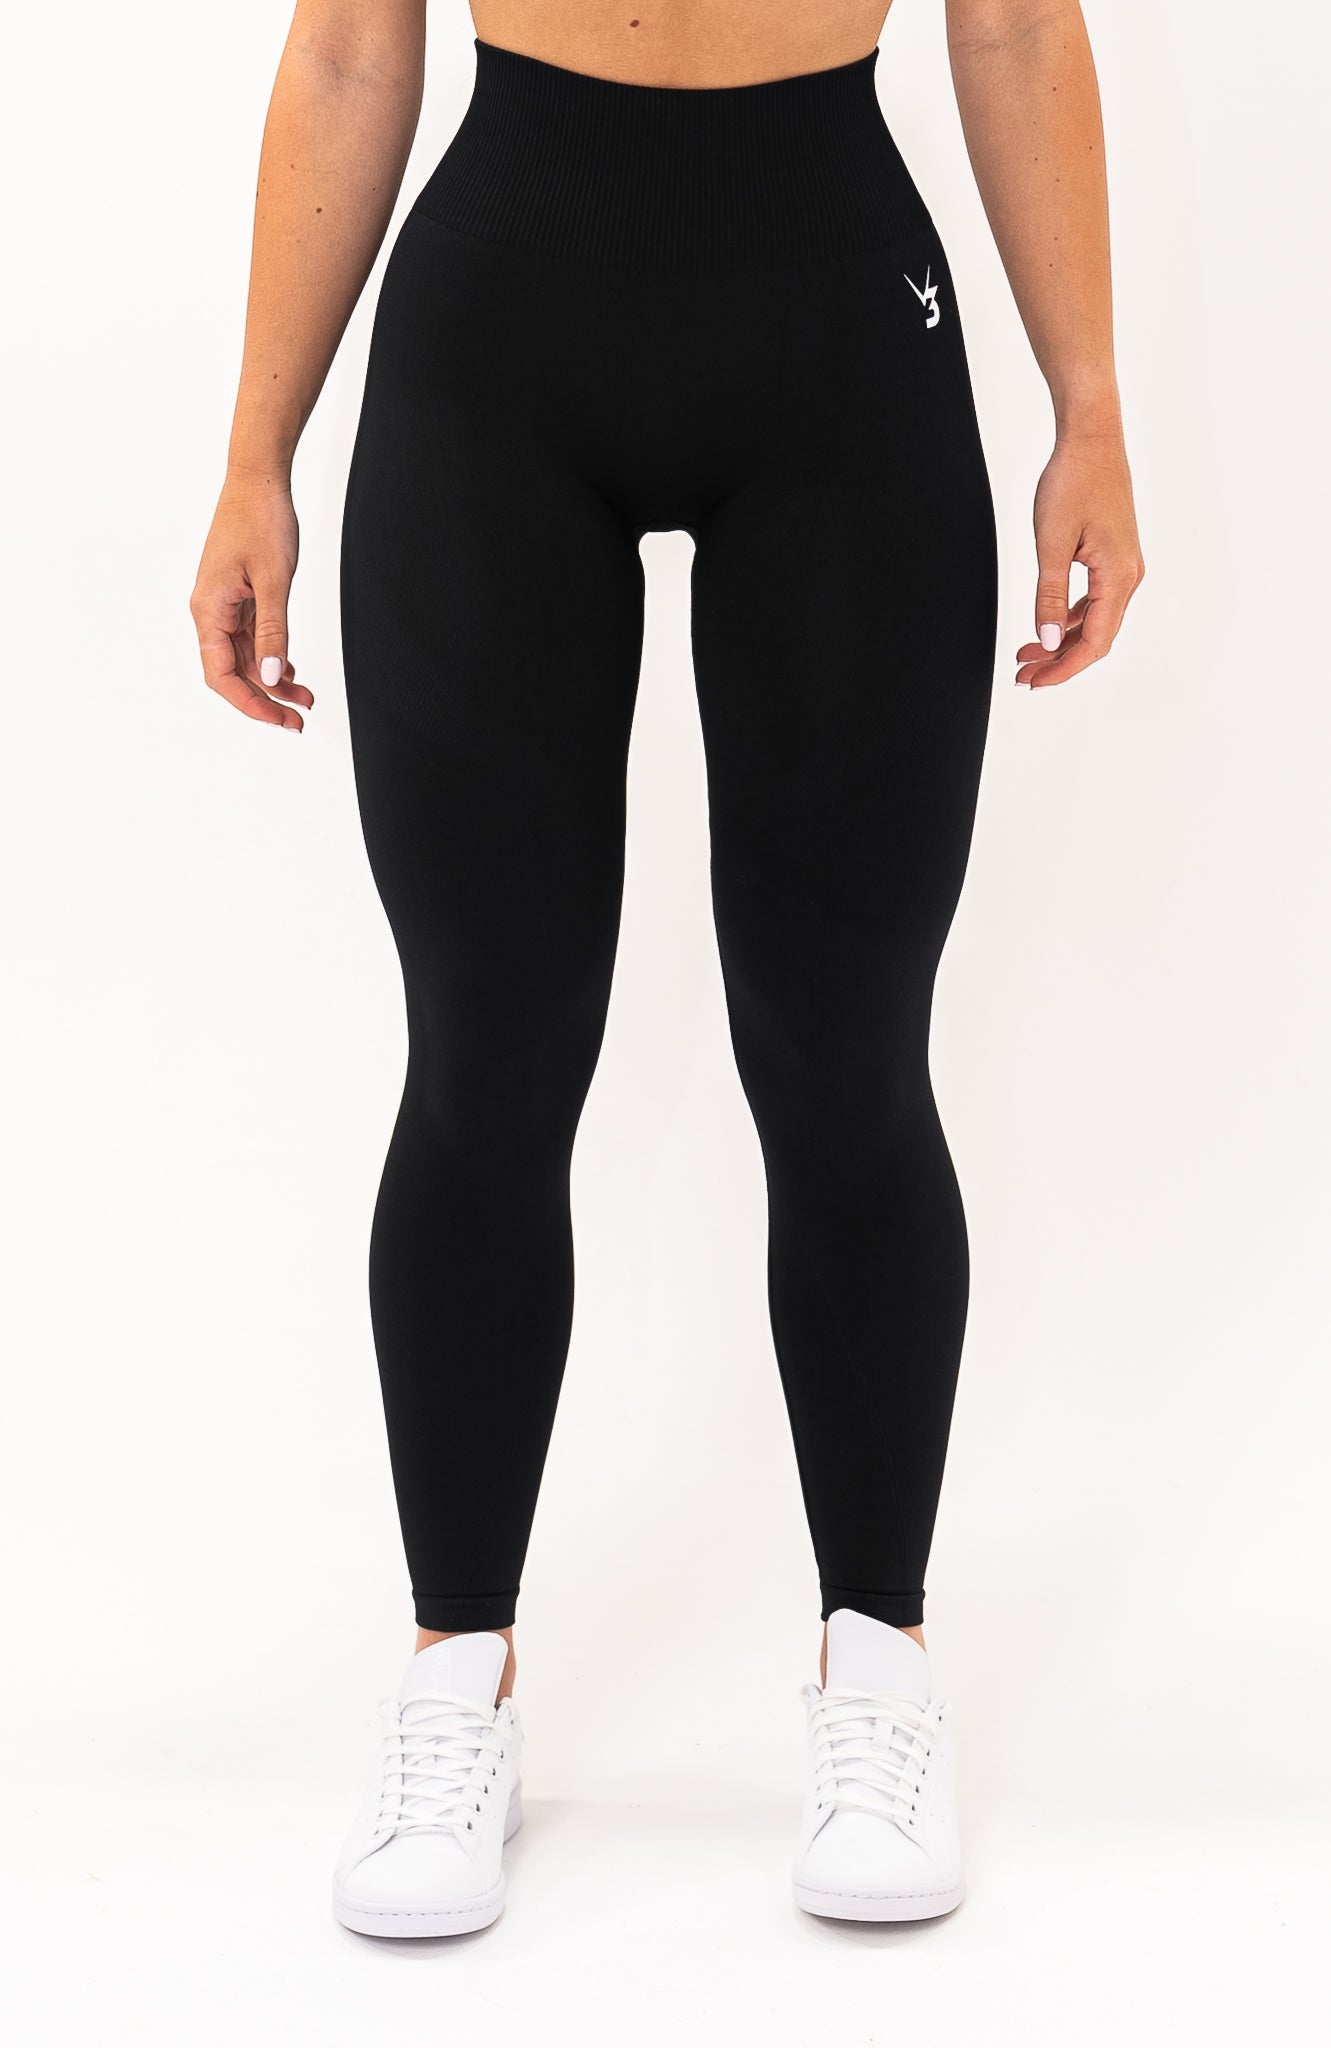 Elevate Seamless Leggings (Black and White)  Black leggings, Seamless  leggings, Leggings